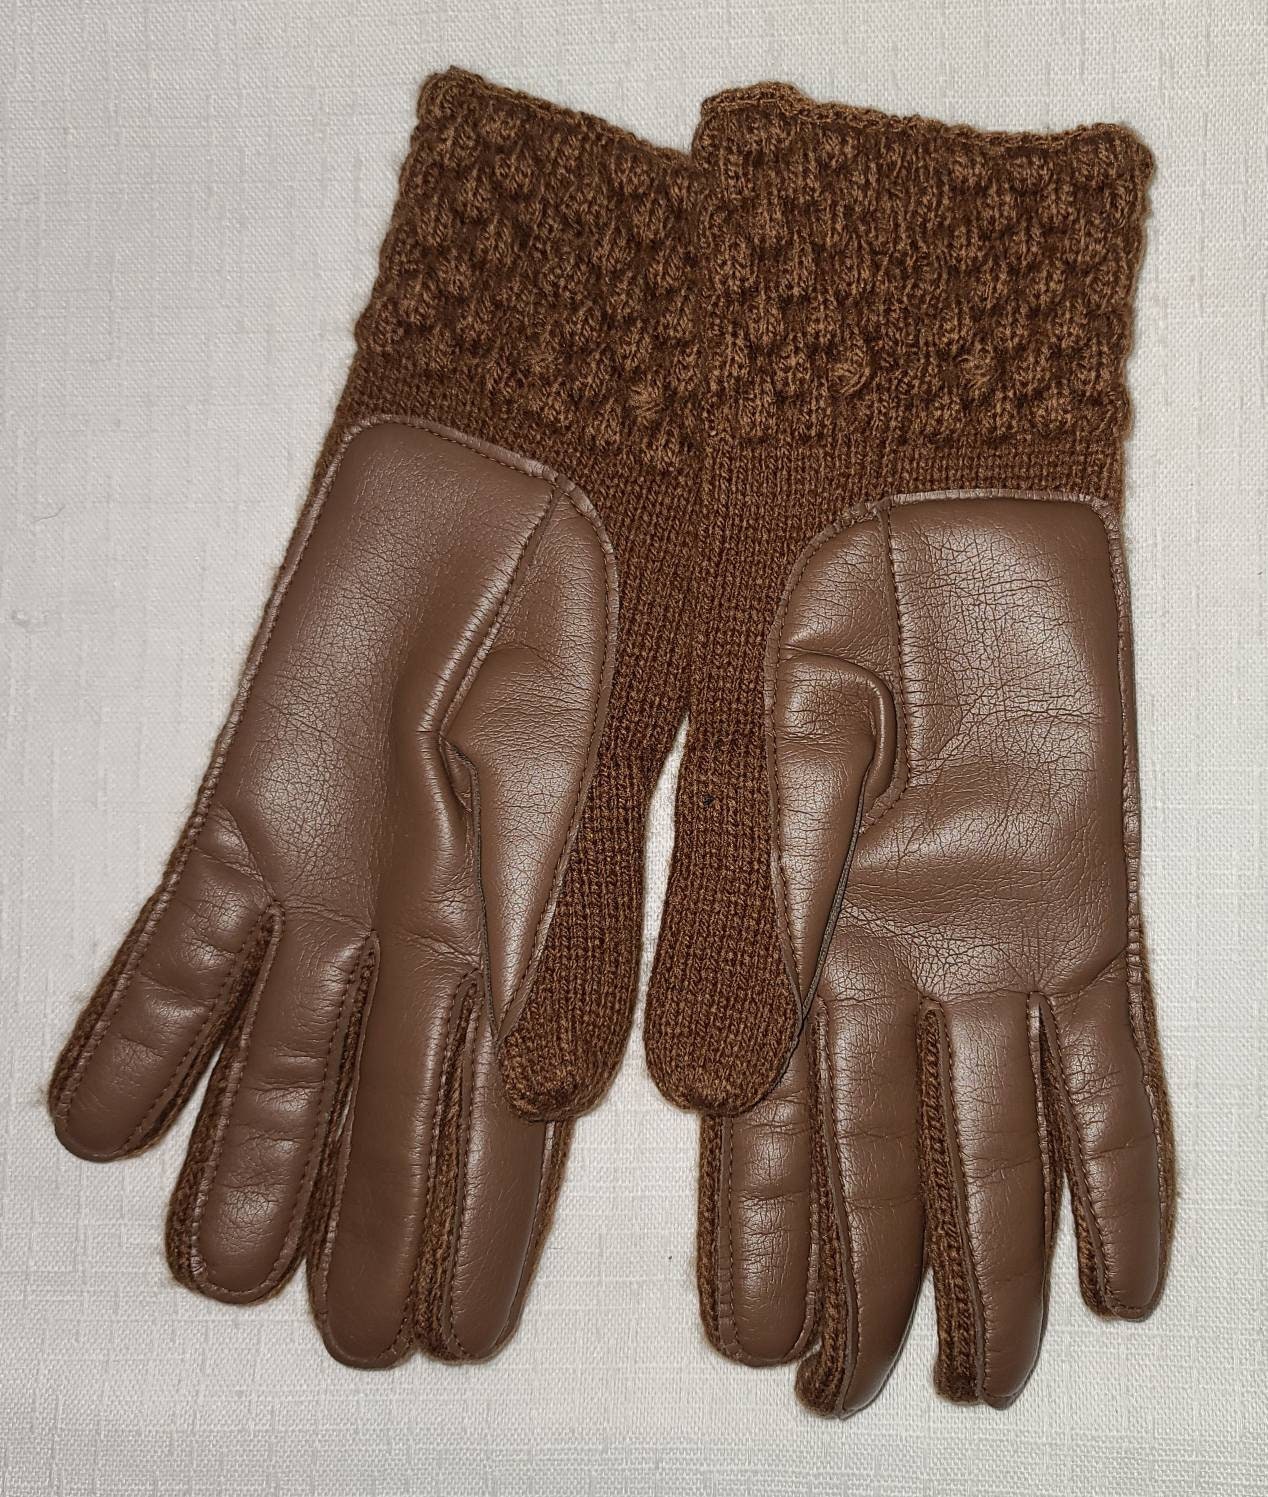 Vintage Knit Gloves 1970s Brown Acrylic Knit Gloves Vinyl Palms Mittens Boho 7 7.5